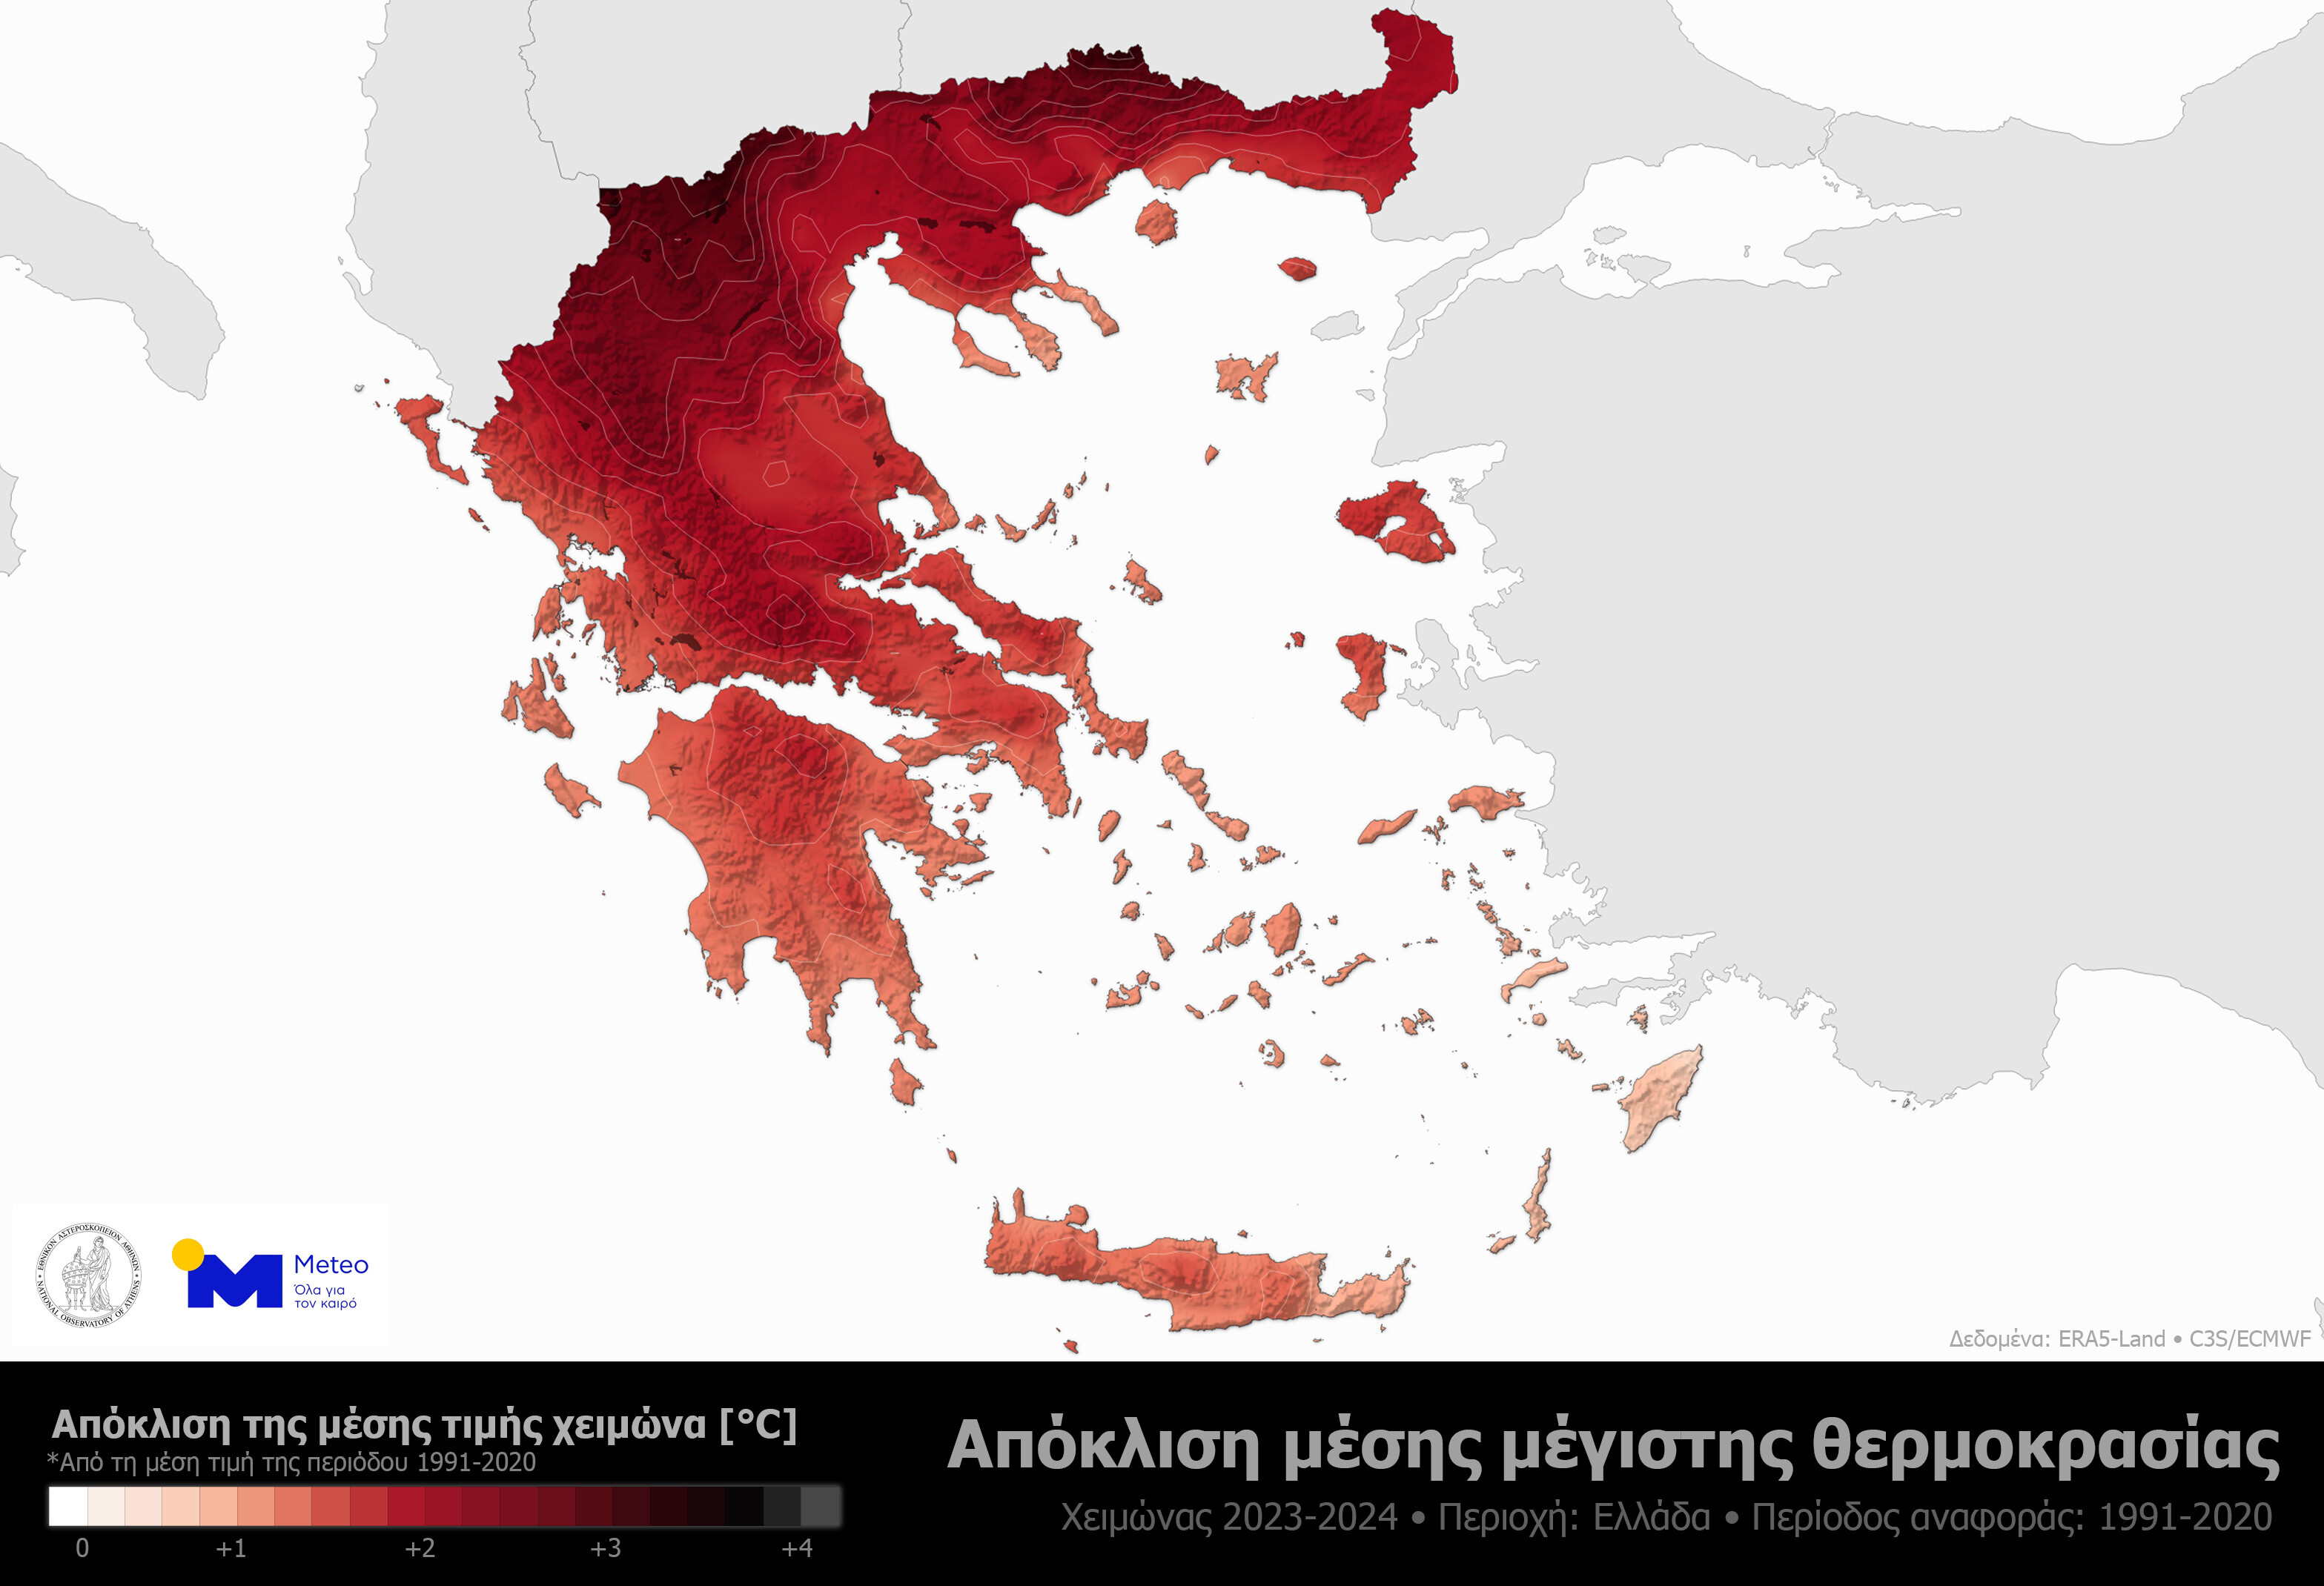 More information about "Χειμώνας 2023-2024: Ο θερμότερος όλων των εποχών στην Ελλάδα"